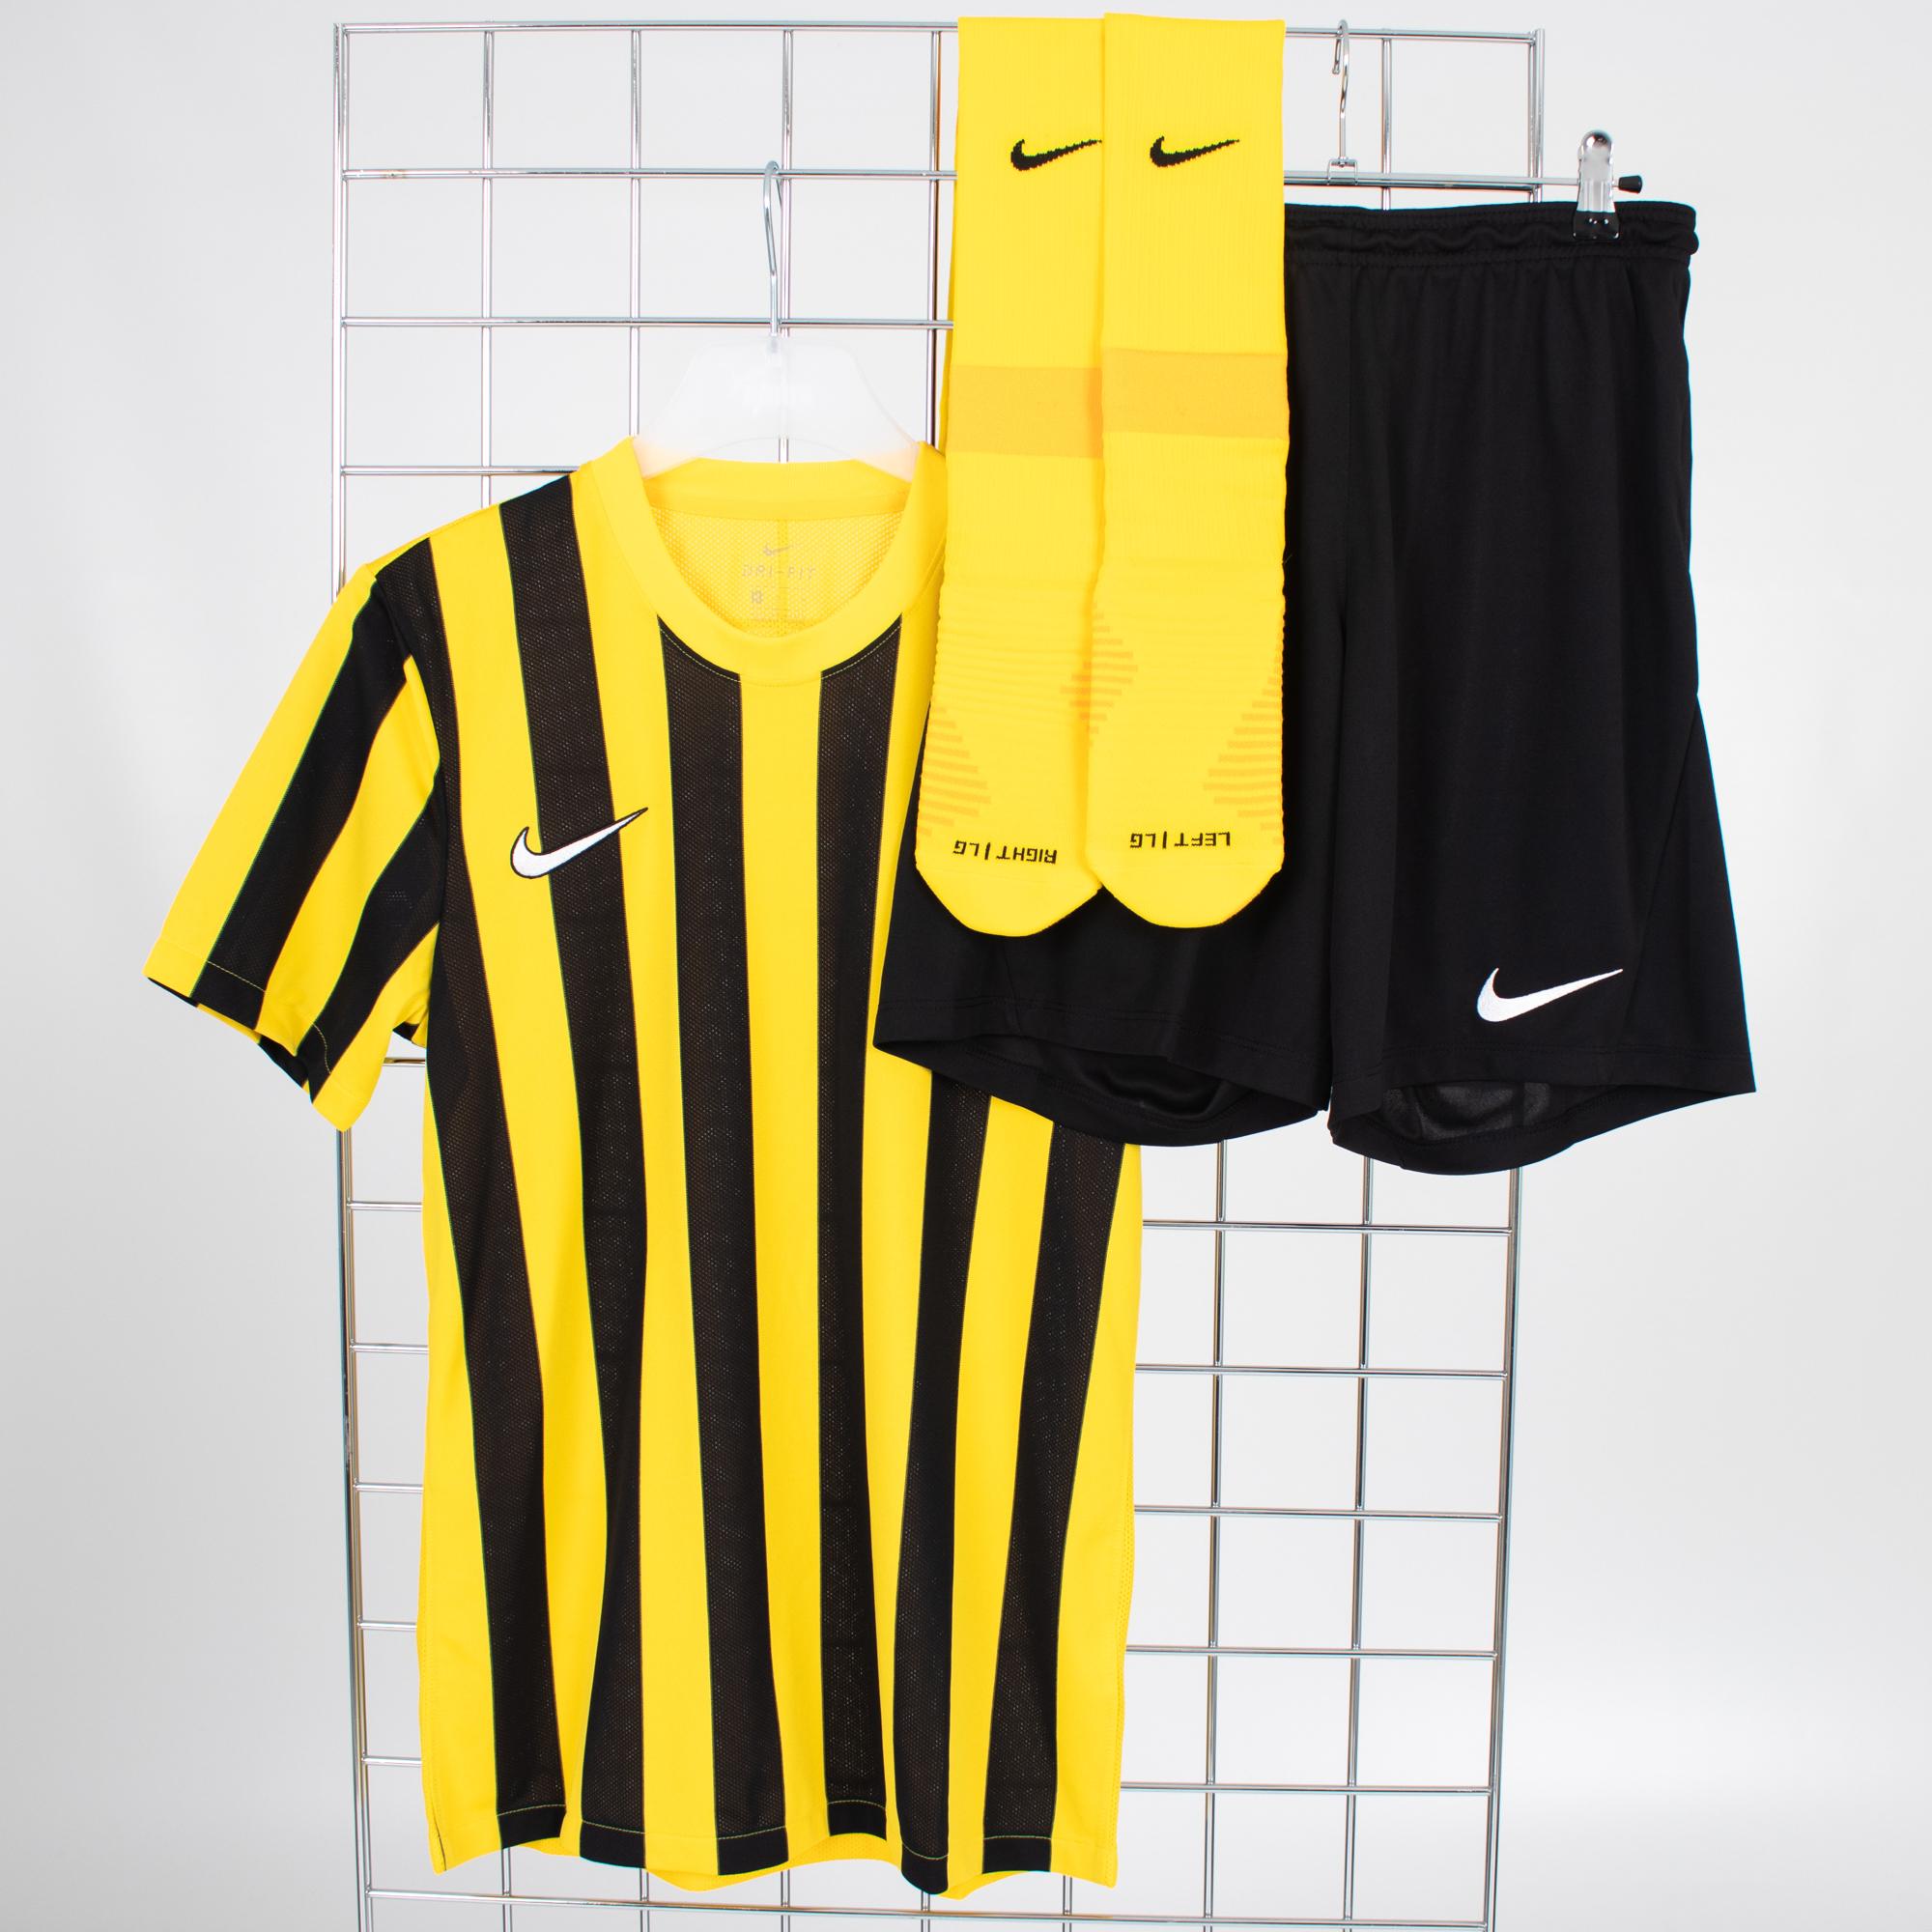 Nike Team Football 2021: Match Kit